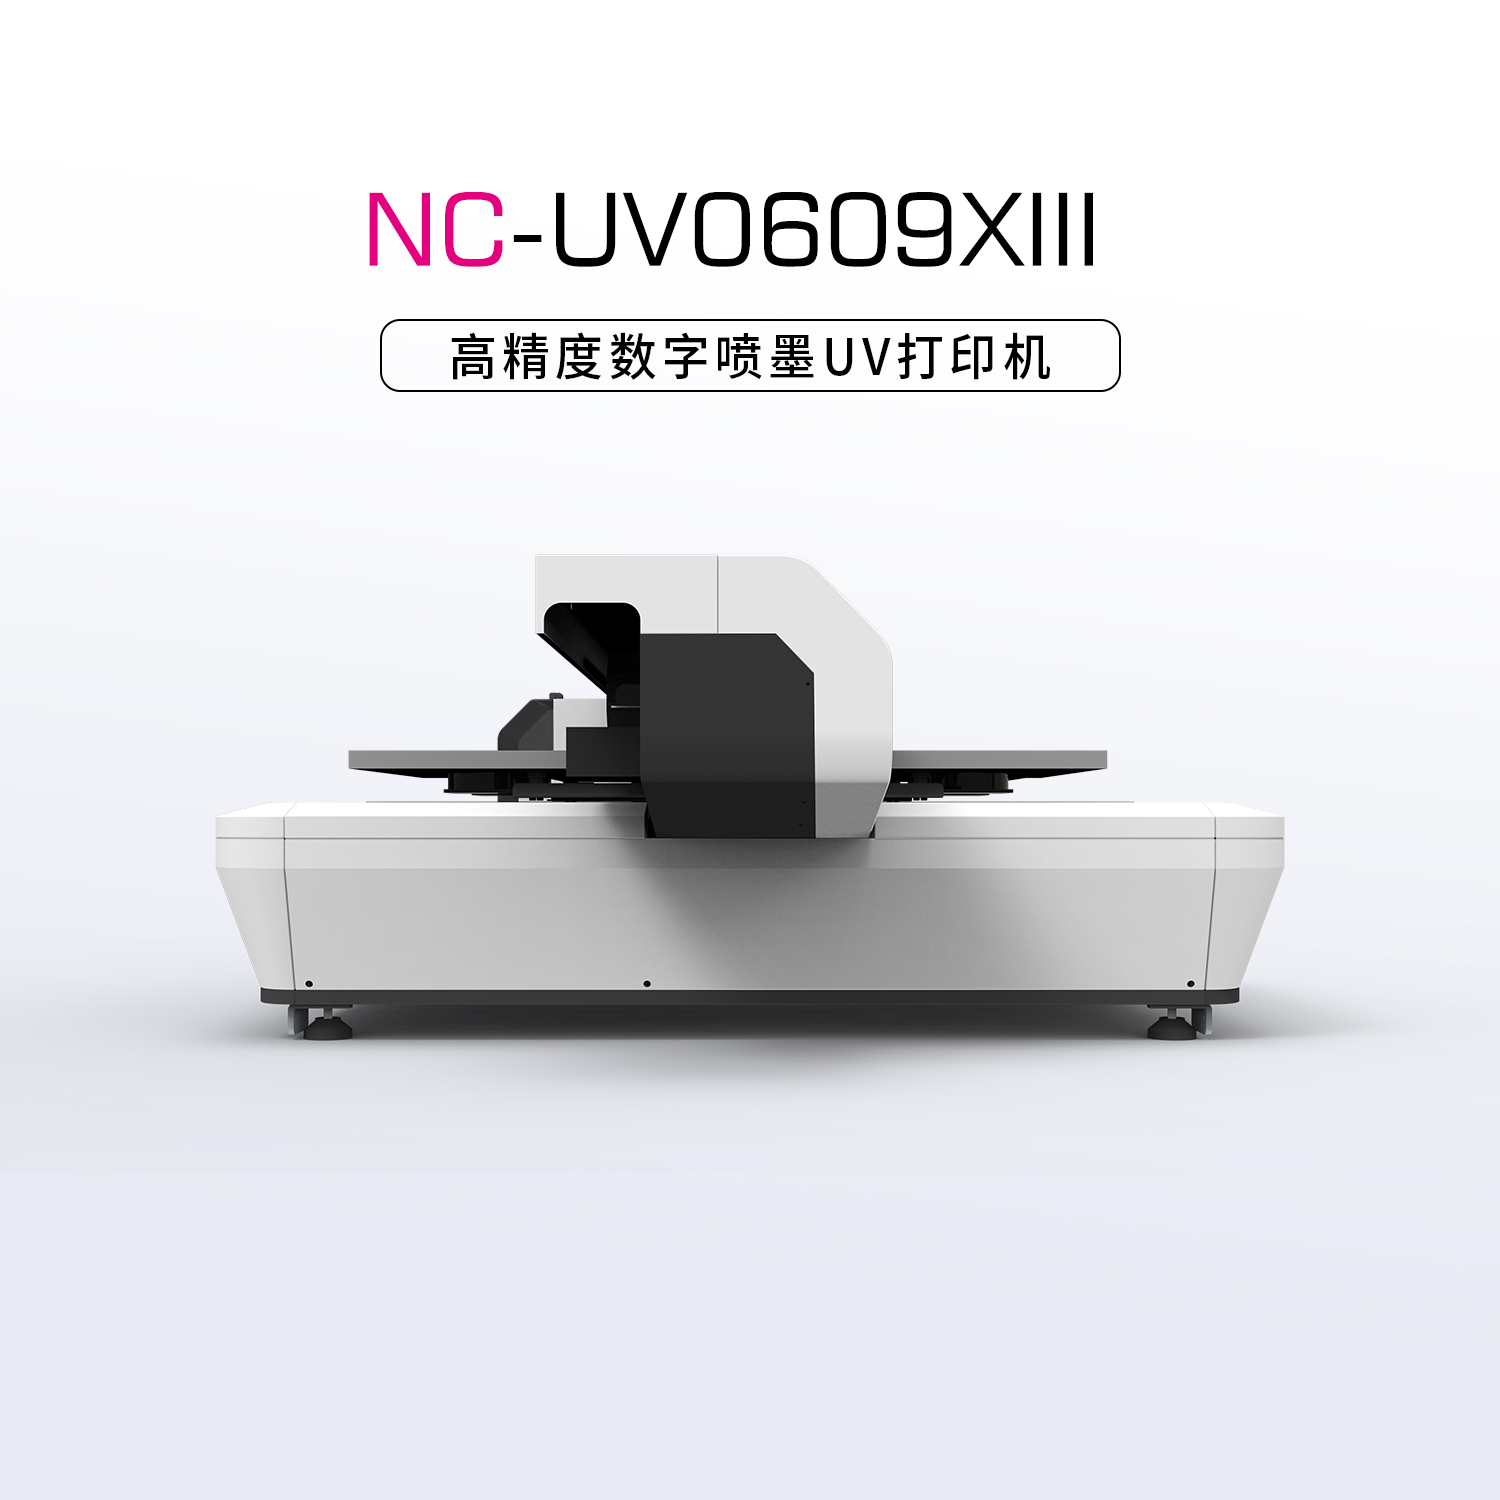 NC-UV0609XIII-小型UV平板打印机